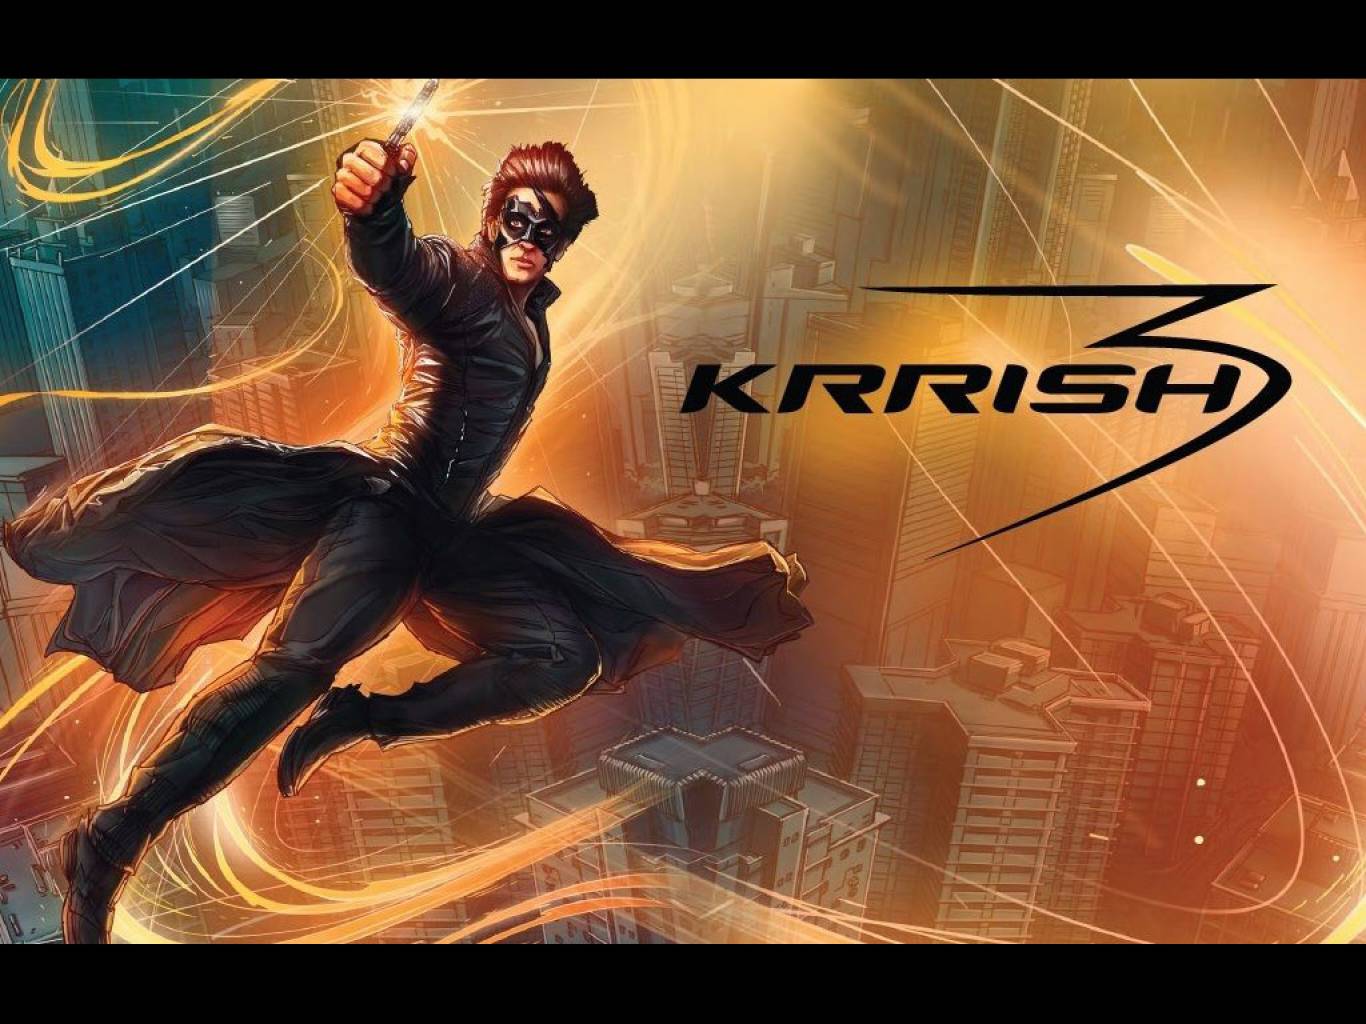 Krrish 3 Movie HD Wallpaper. Krrish 3 HD Movie Wallpaper Free Download (1080p to 2K)